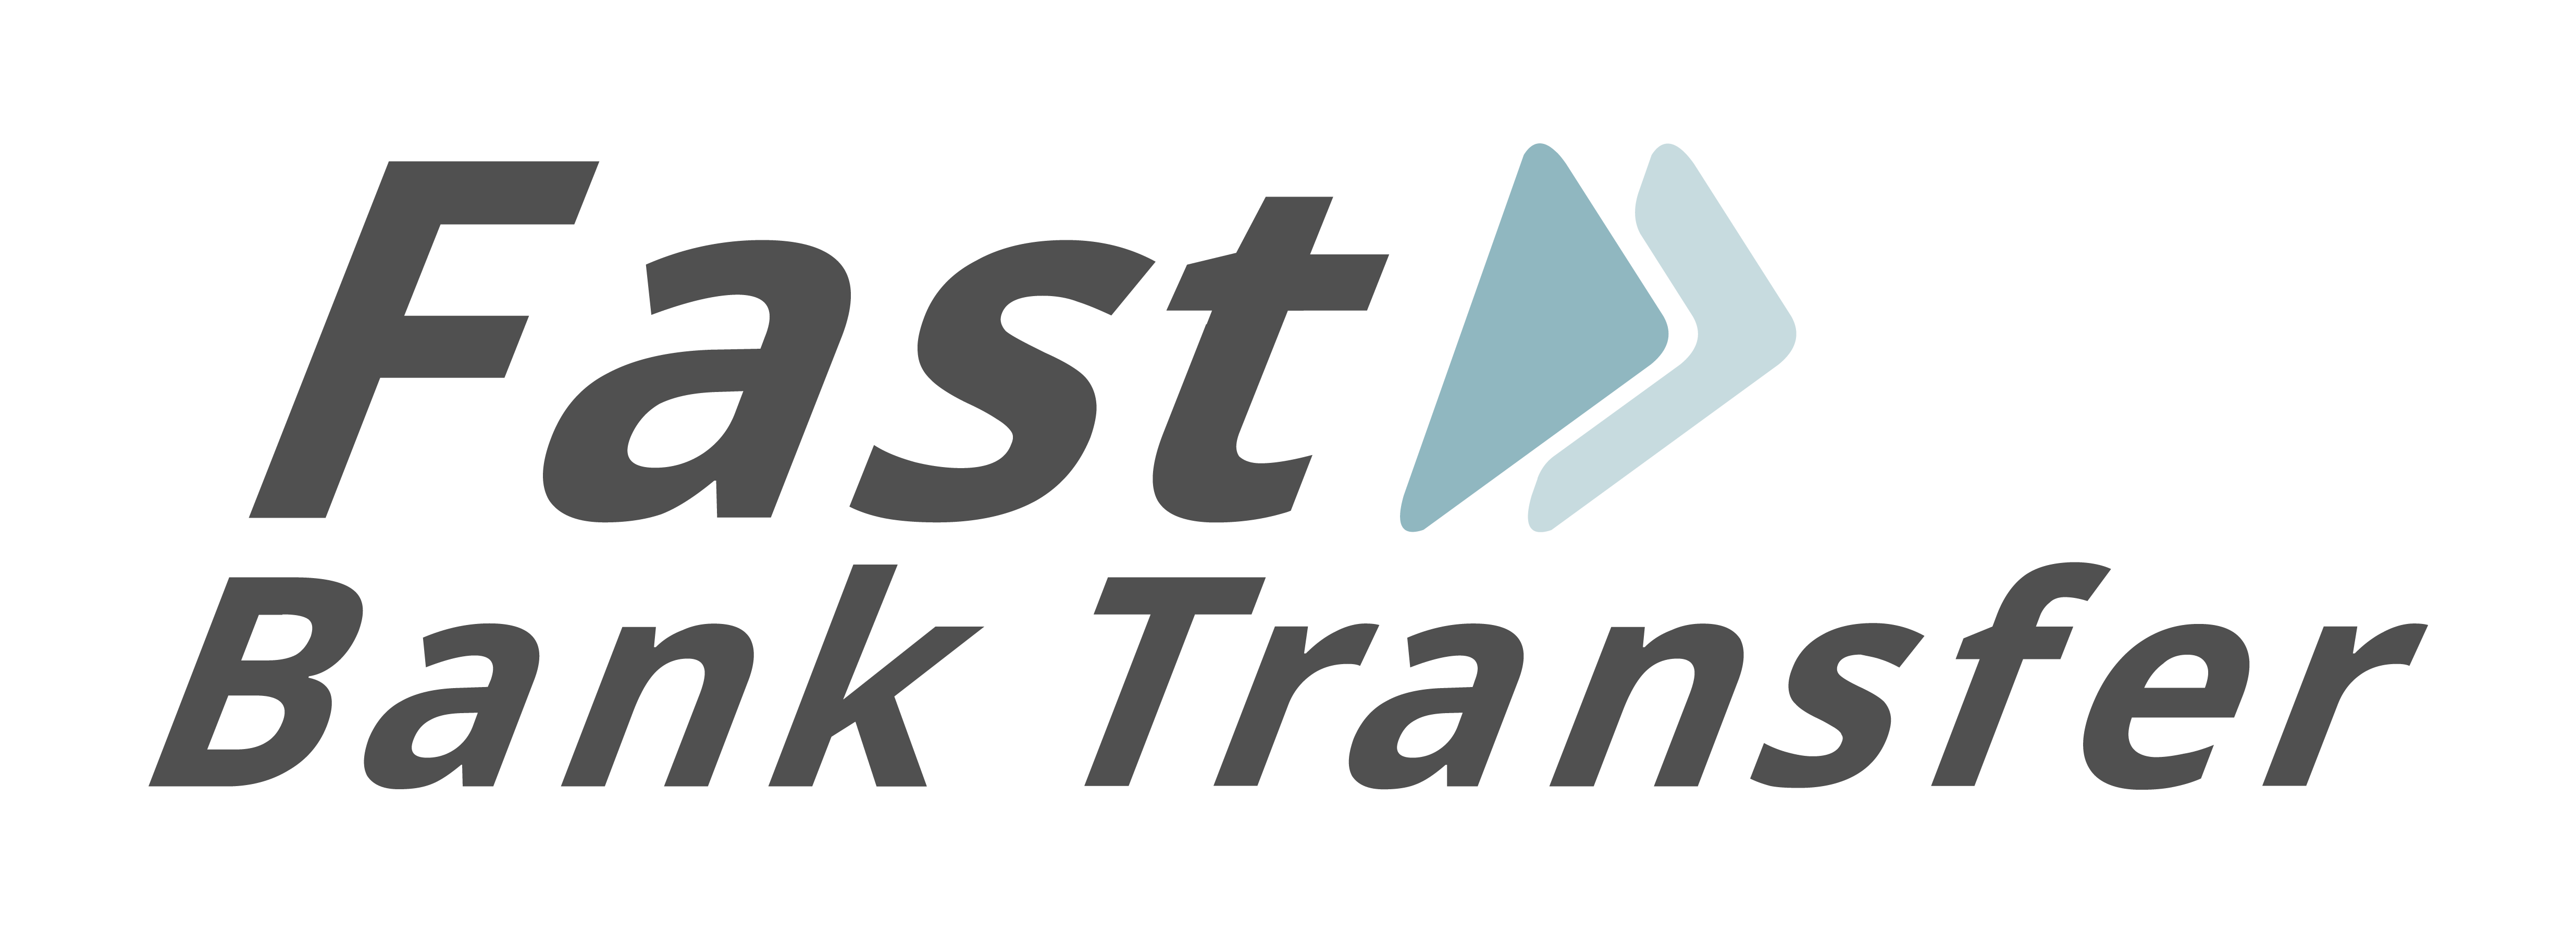 fast bank transfer